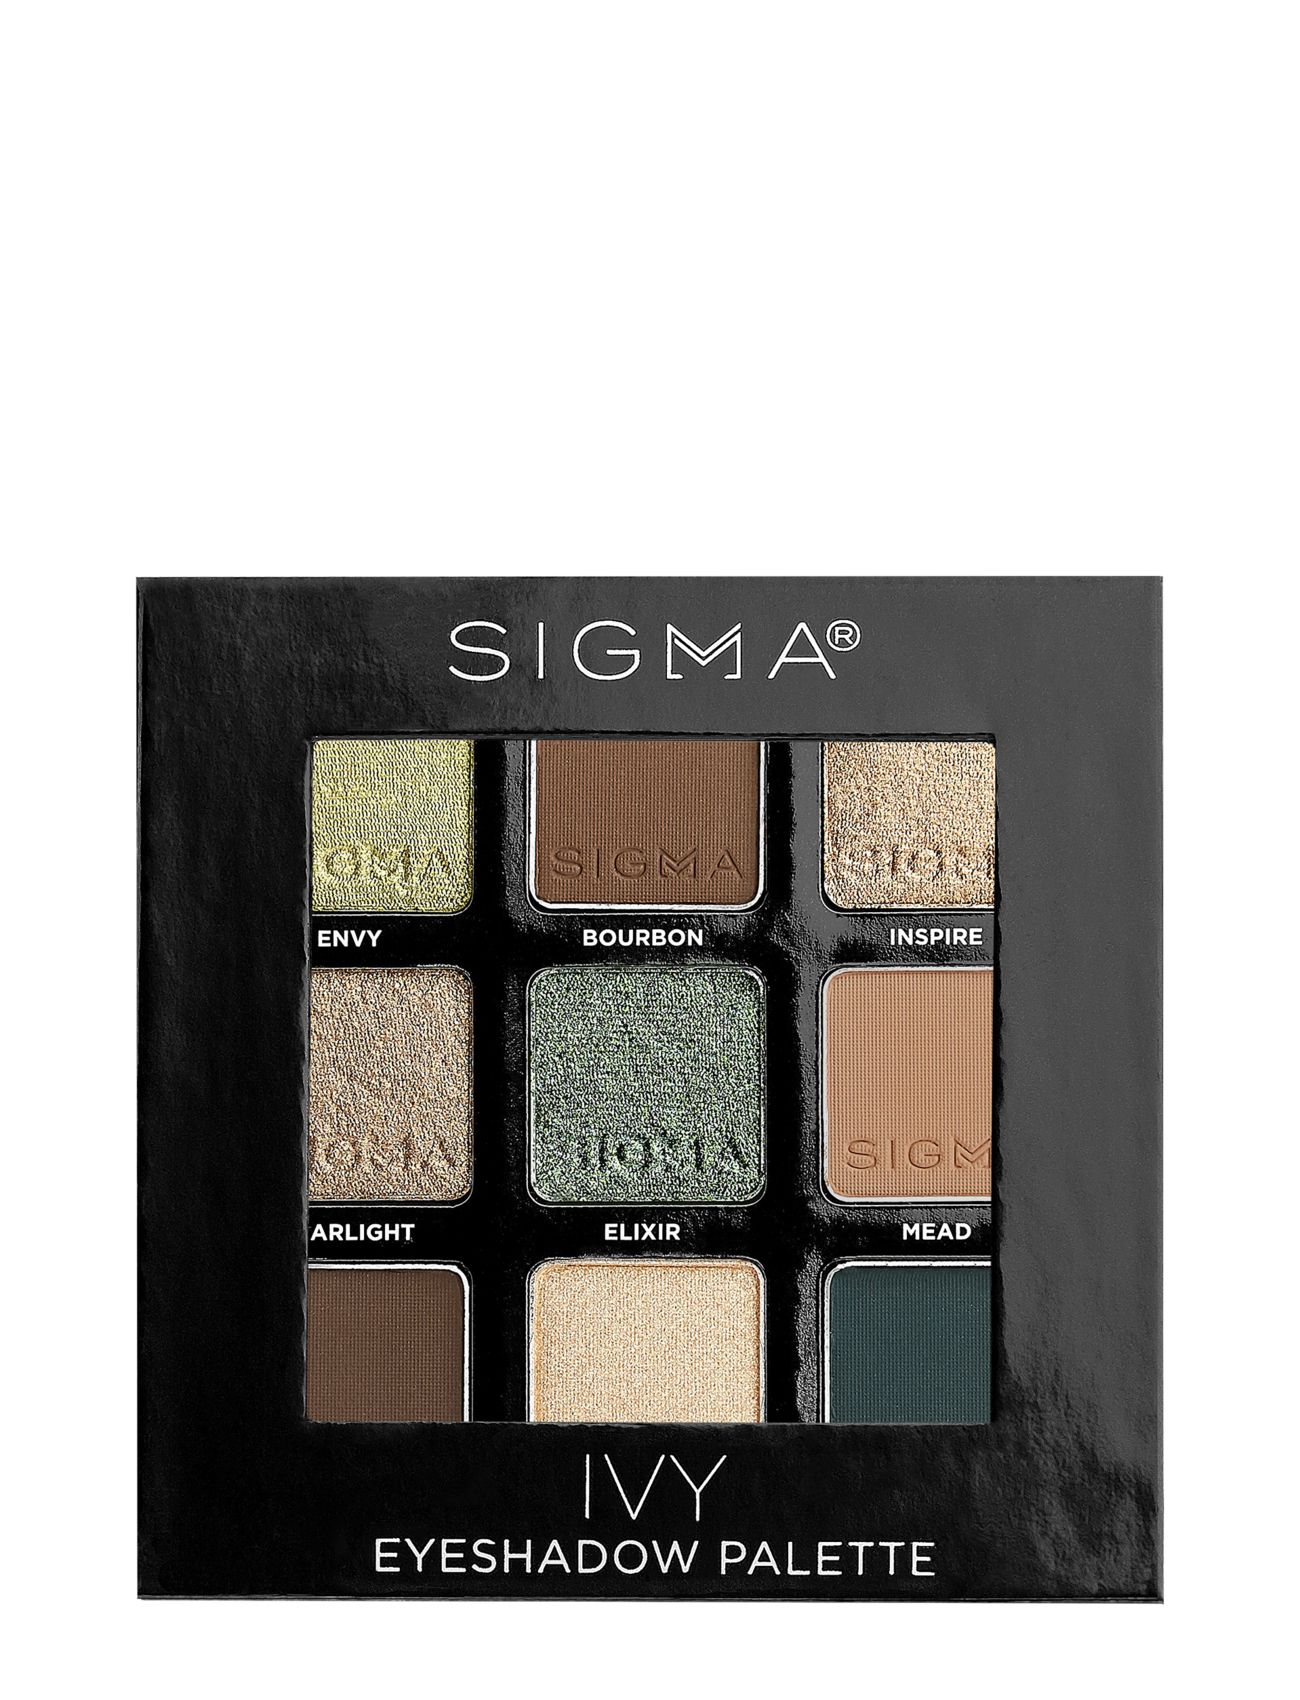 Ivy Eyeshadow Palette Ögonskugga Palette Smink Multi/patterned SIGMA Beauty